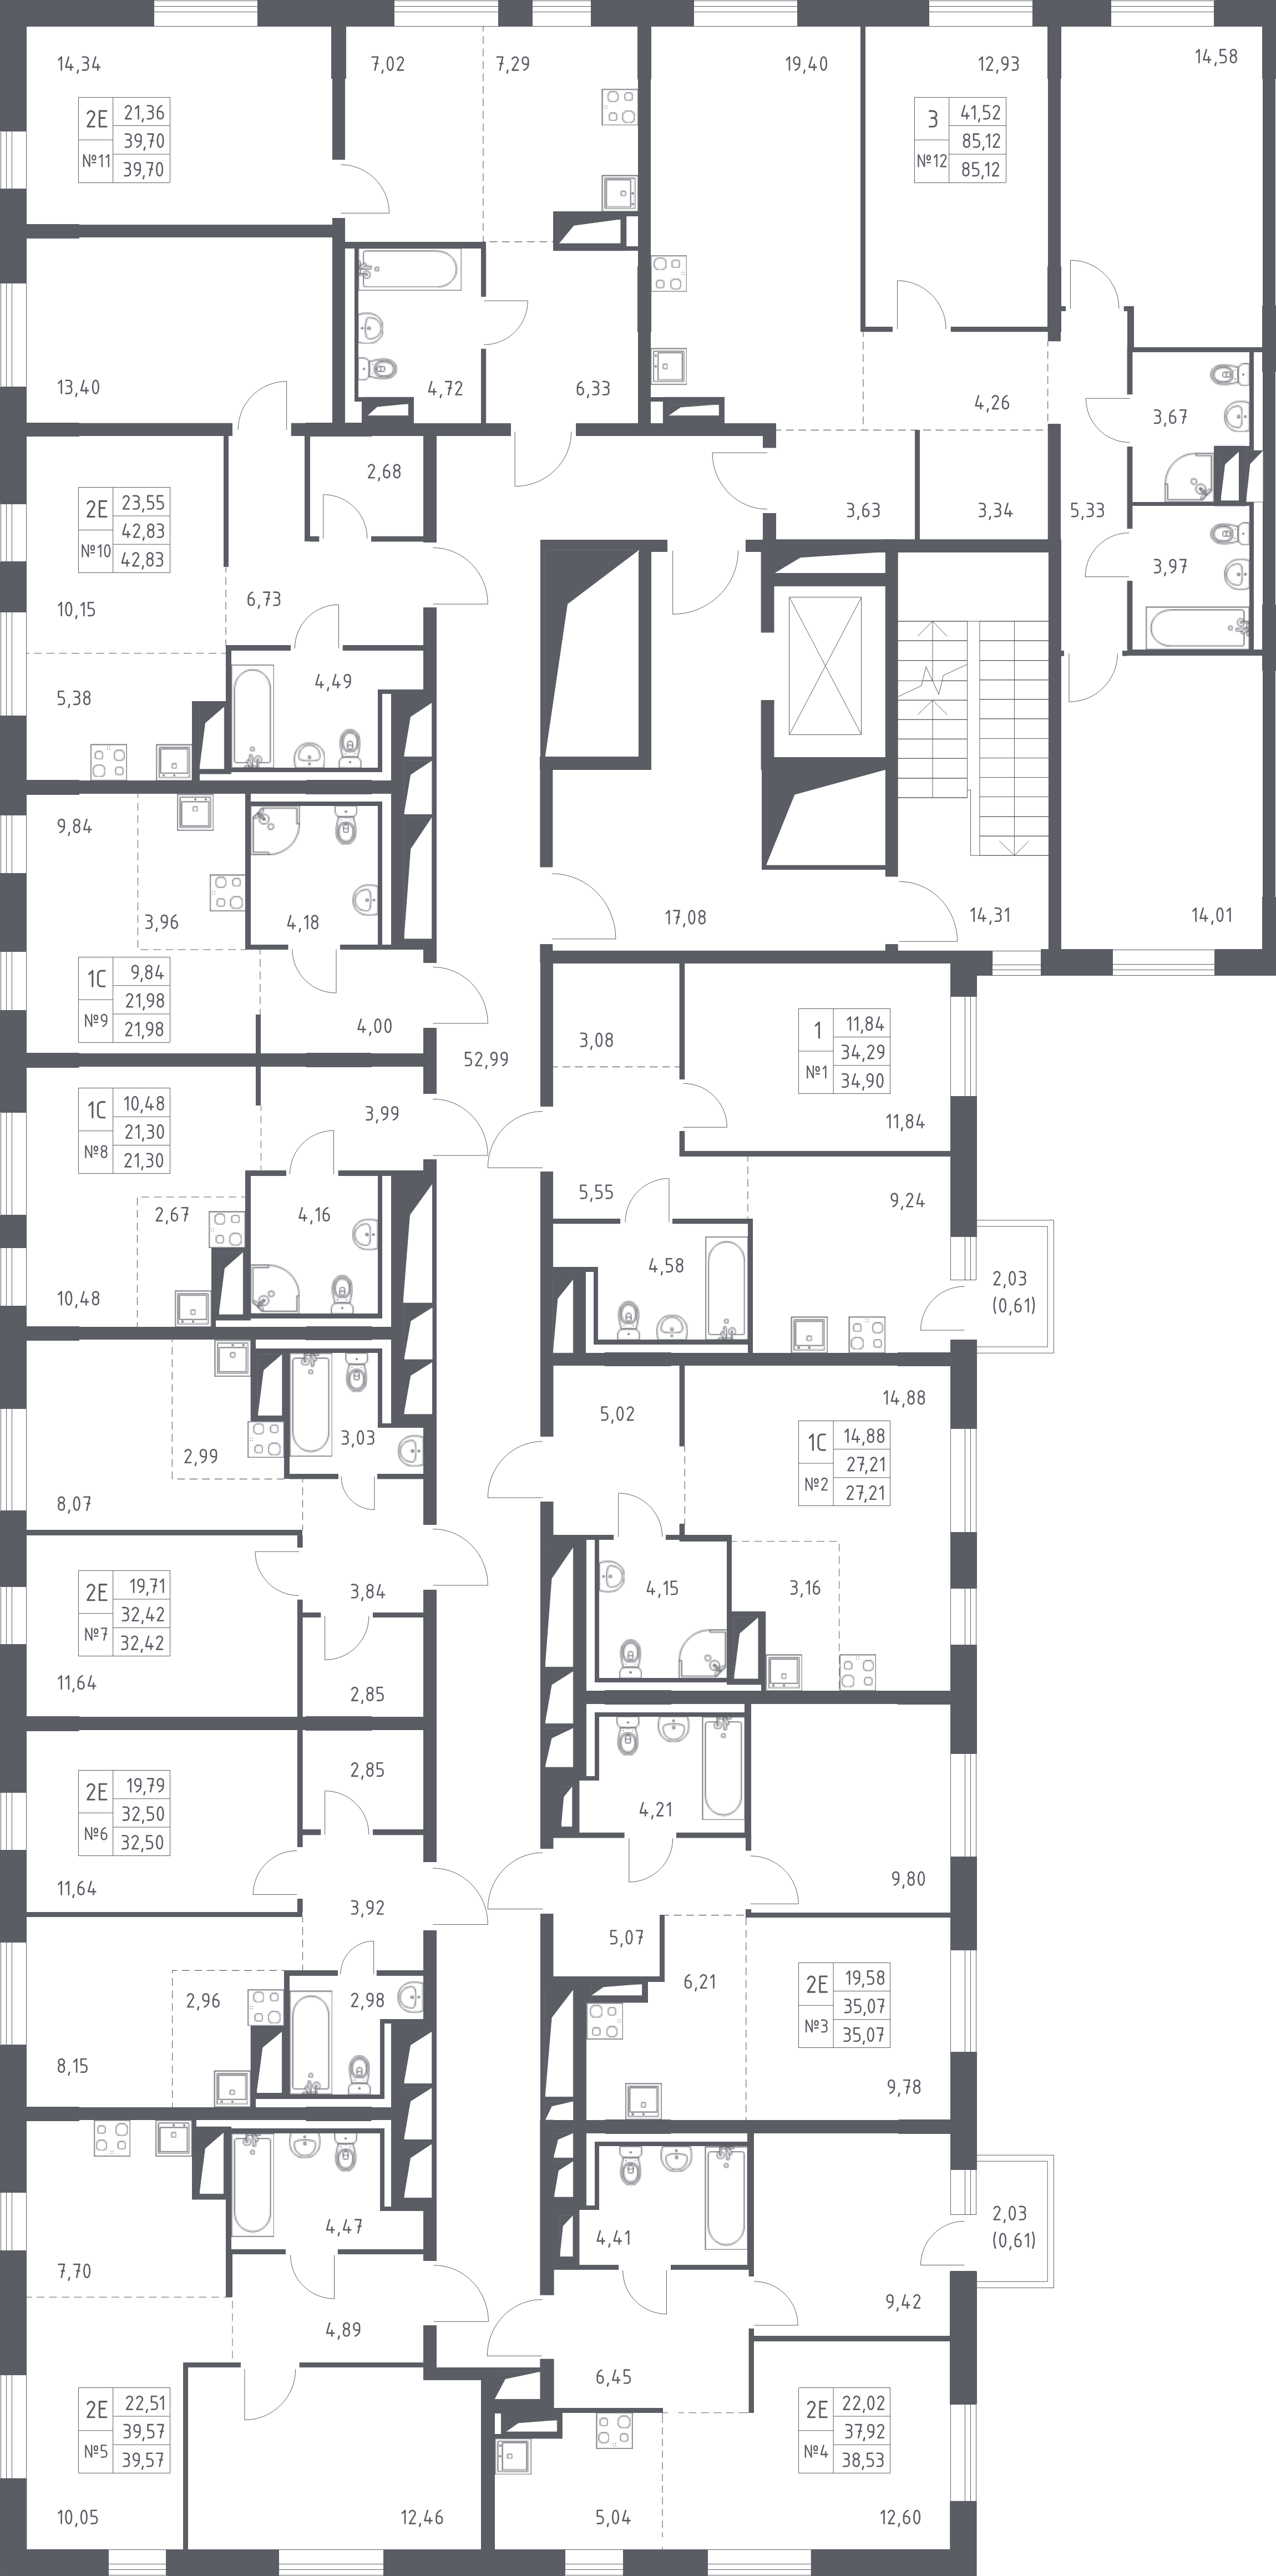 2-комнатная (Евро) квартира, 35.07 м² в ЖК "Квартал Лаголово" - планировка этажа